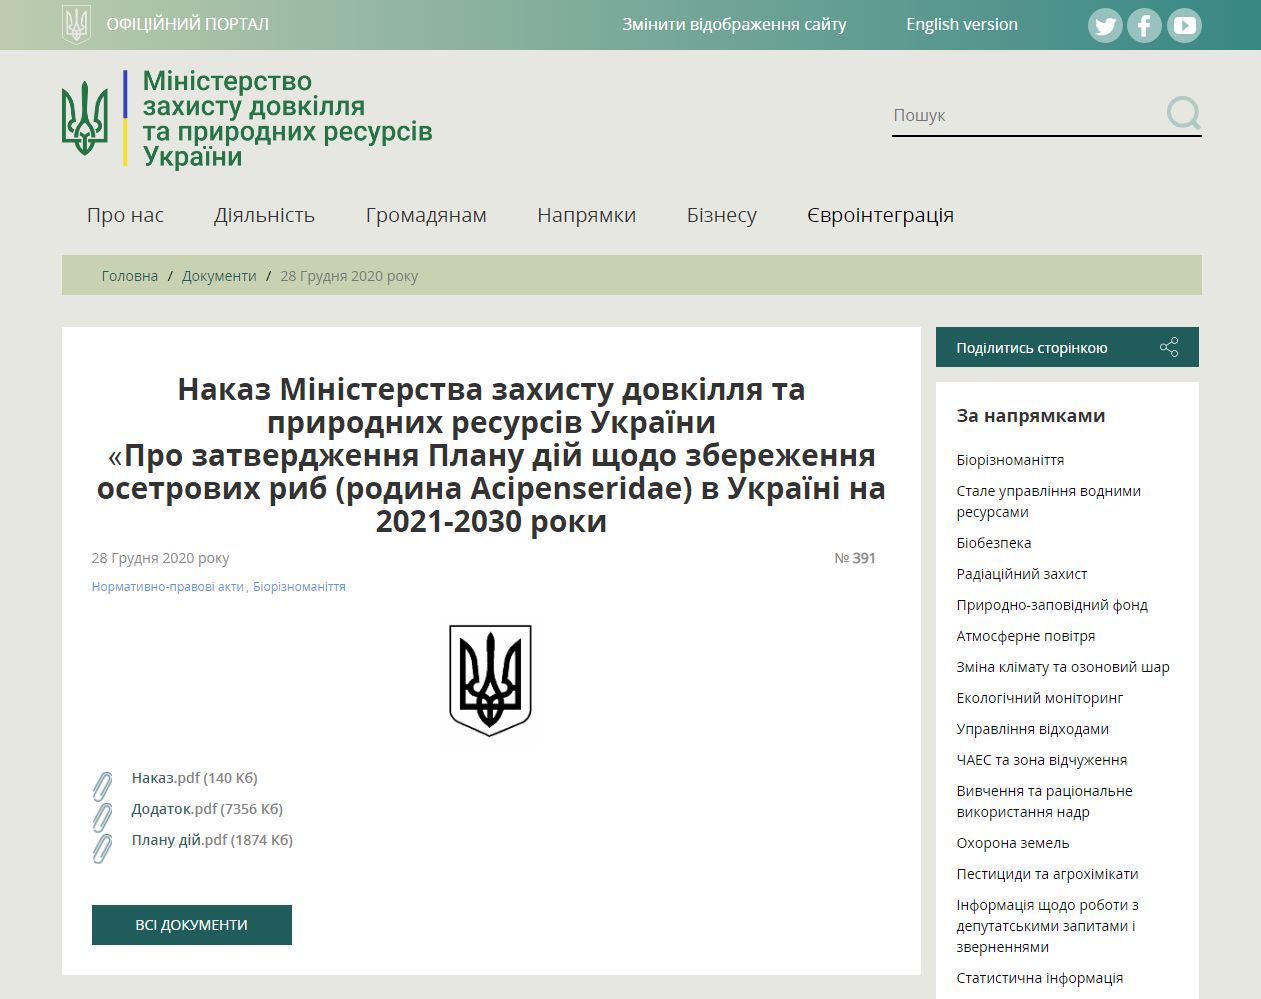 https://mepr.gov.ua/documents/3182.html